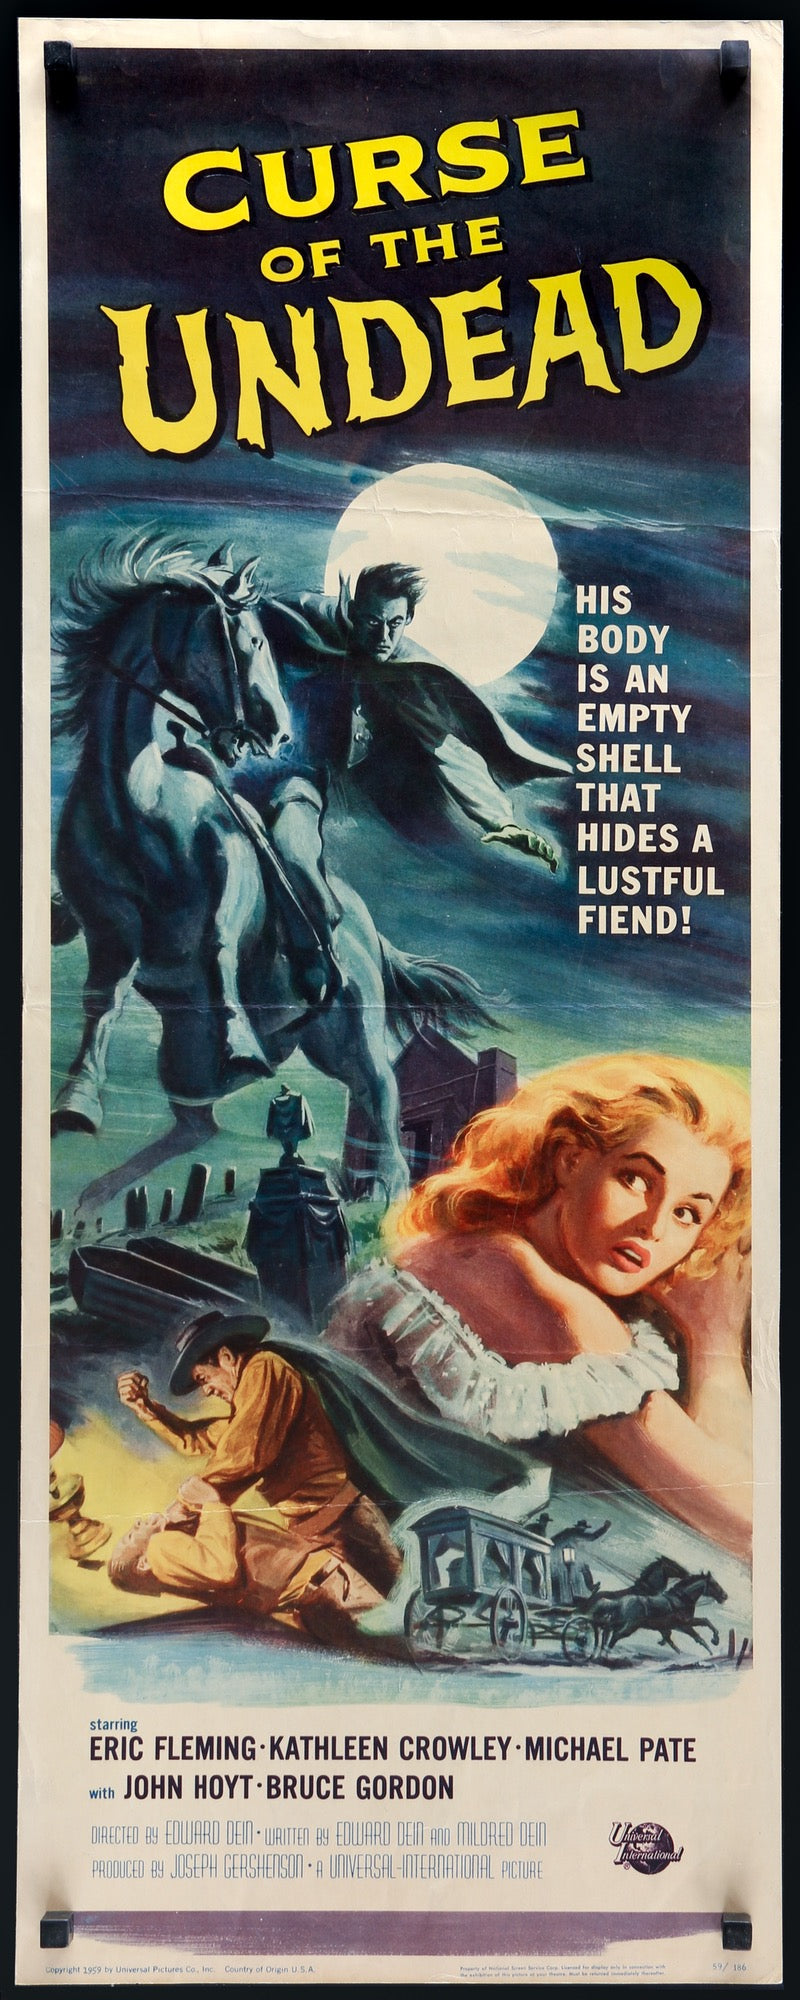 Curse Of the Undead (1959) original movie poster for sale at Original Film Art